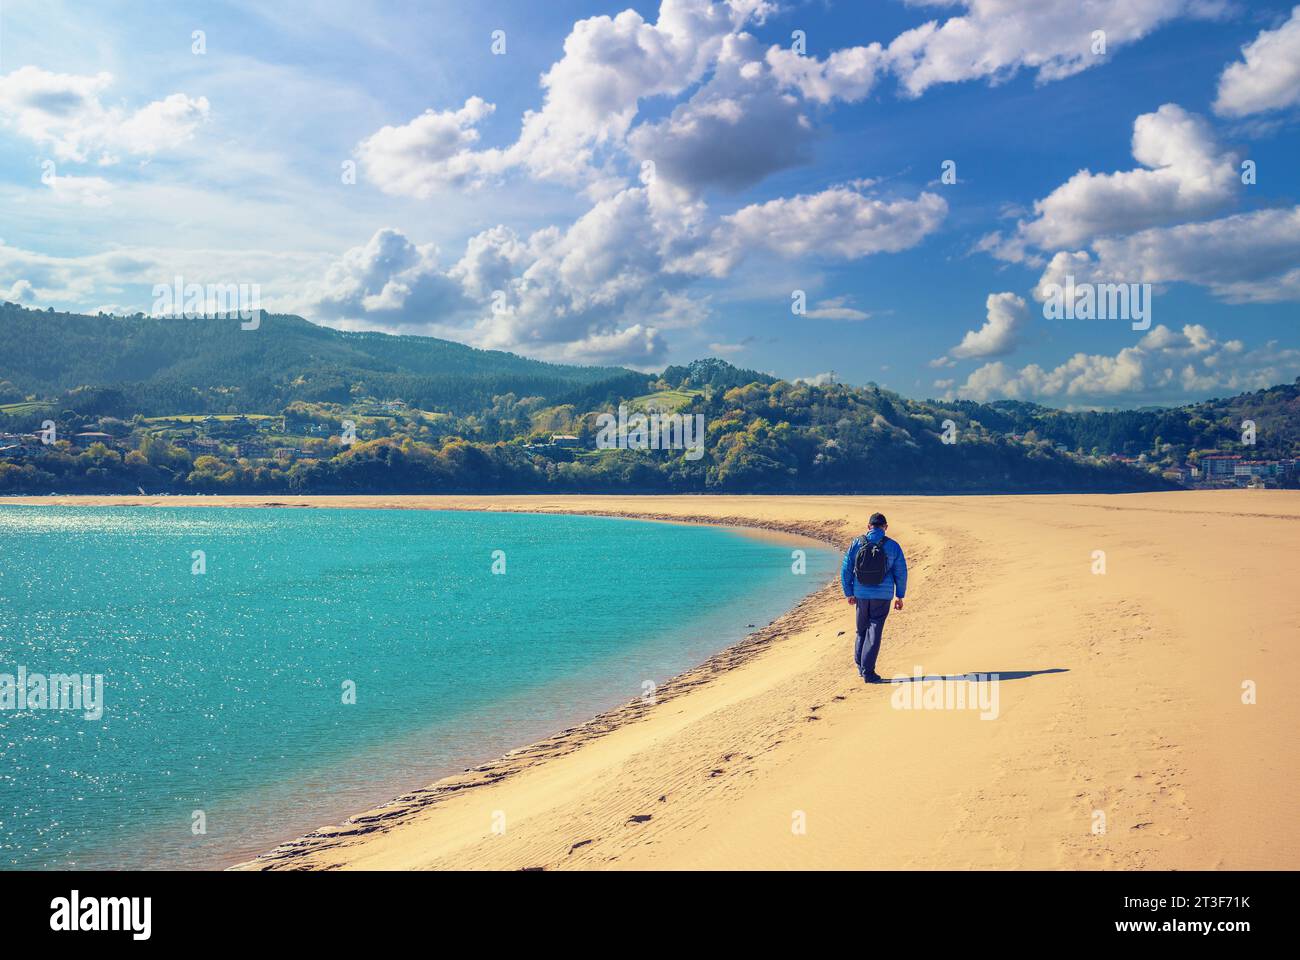 A man walks on the beach. Man looks at the sea Stock Photo